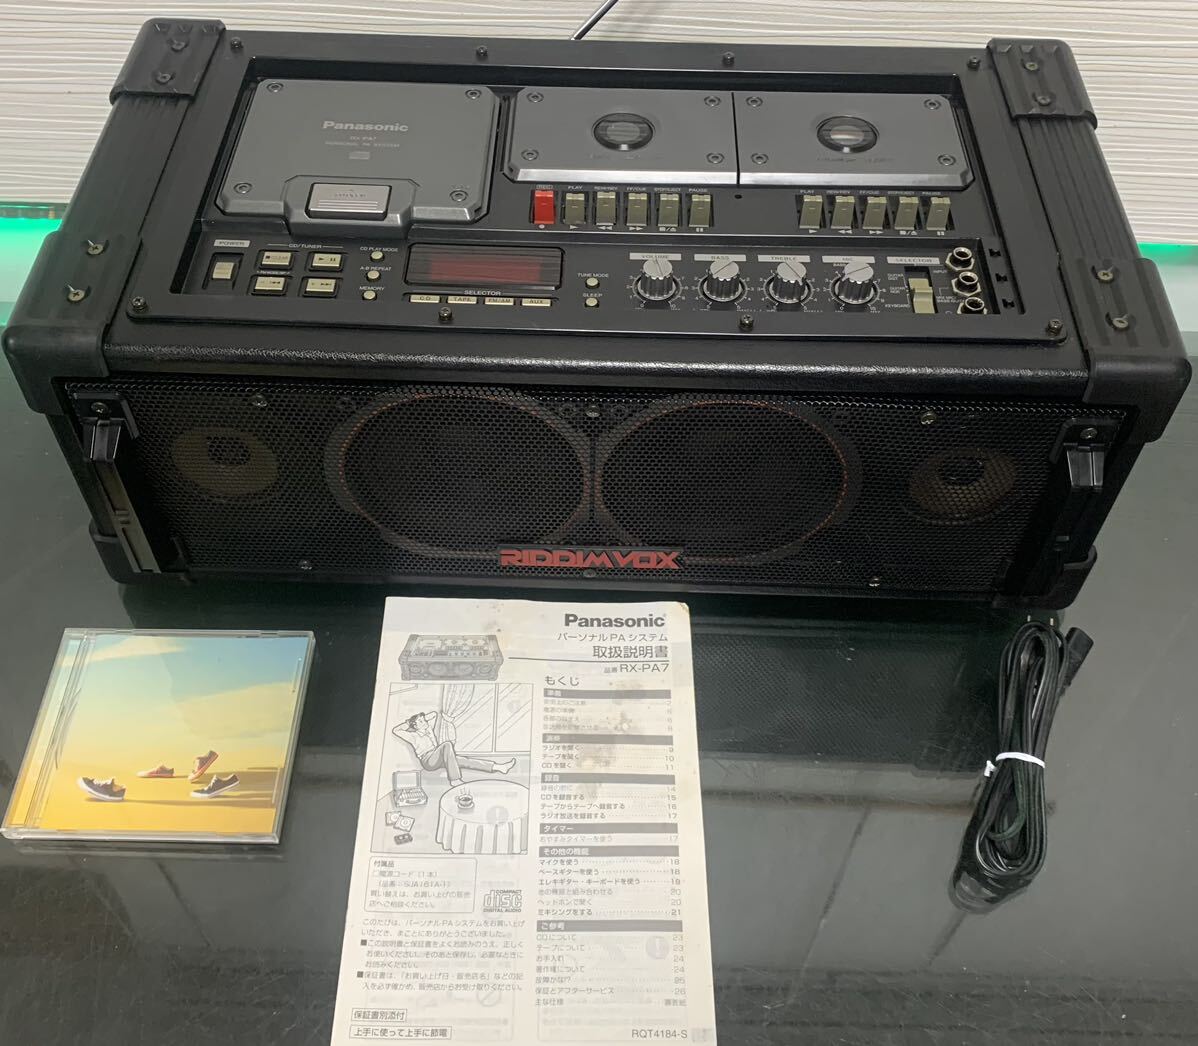  Panasonic PANASONIC RX-PA7 /RIDDIMVOX CD radio-cassette made in Japan maintenance ending operation goods 